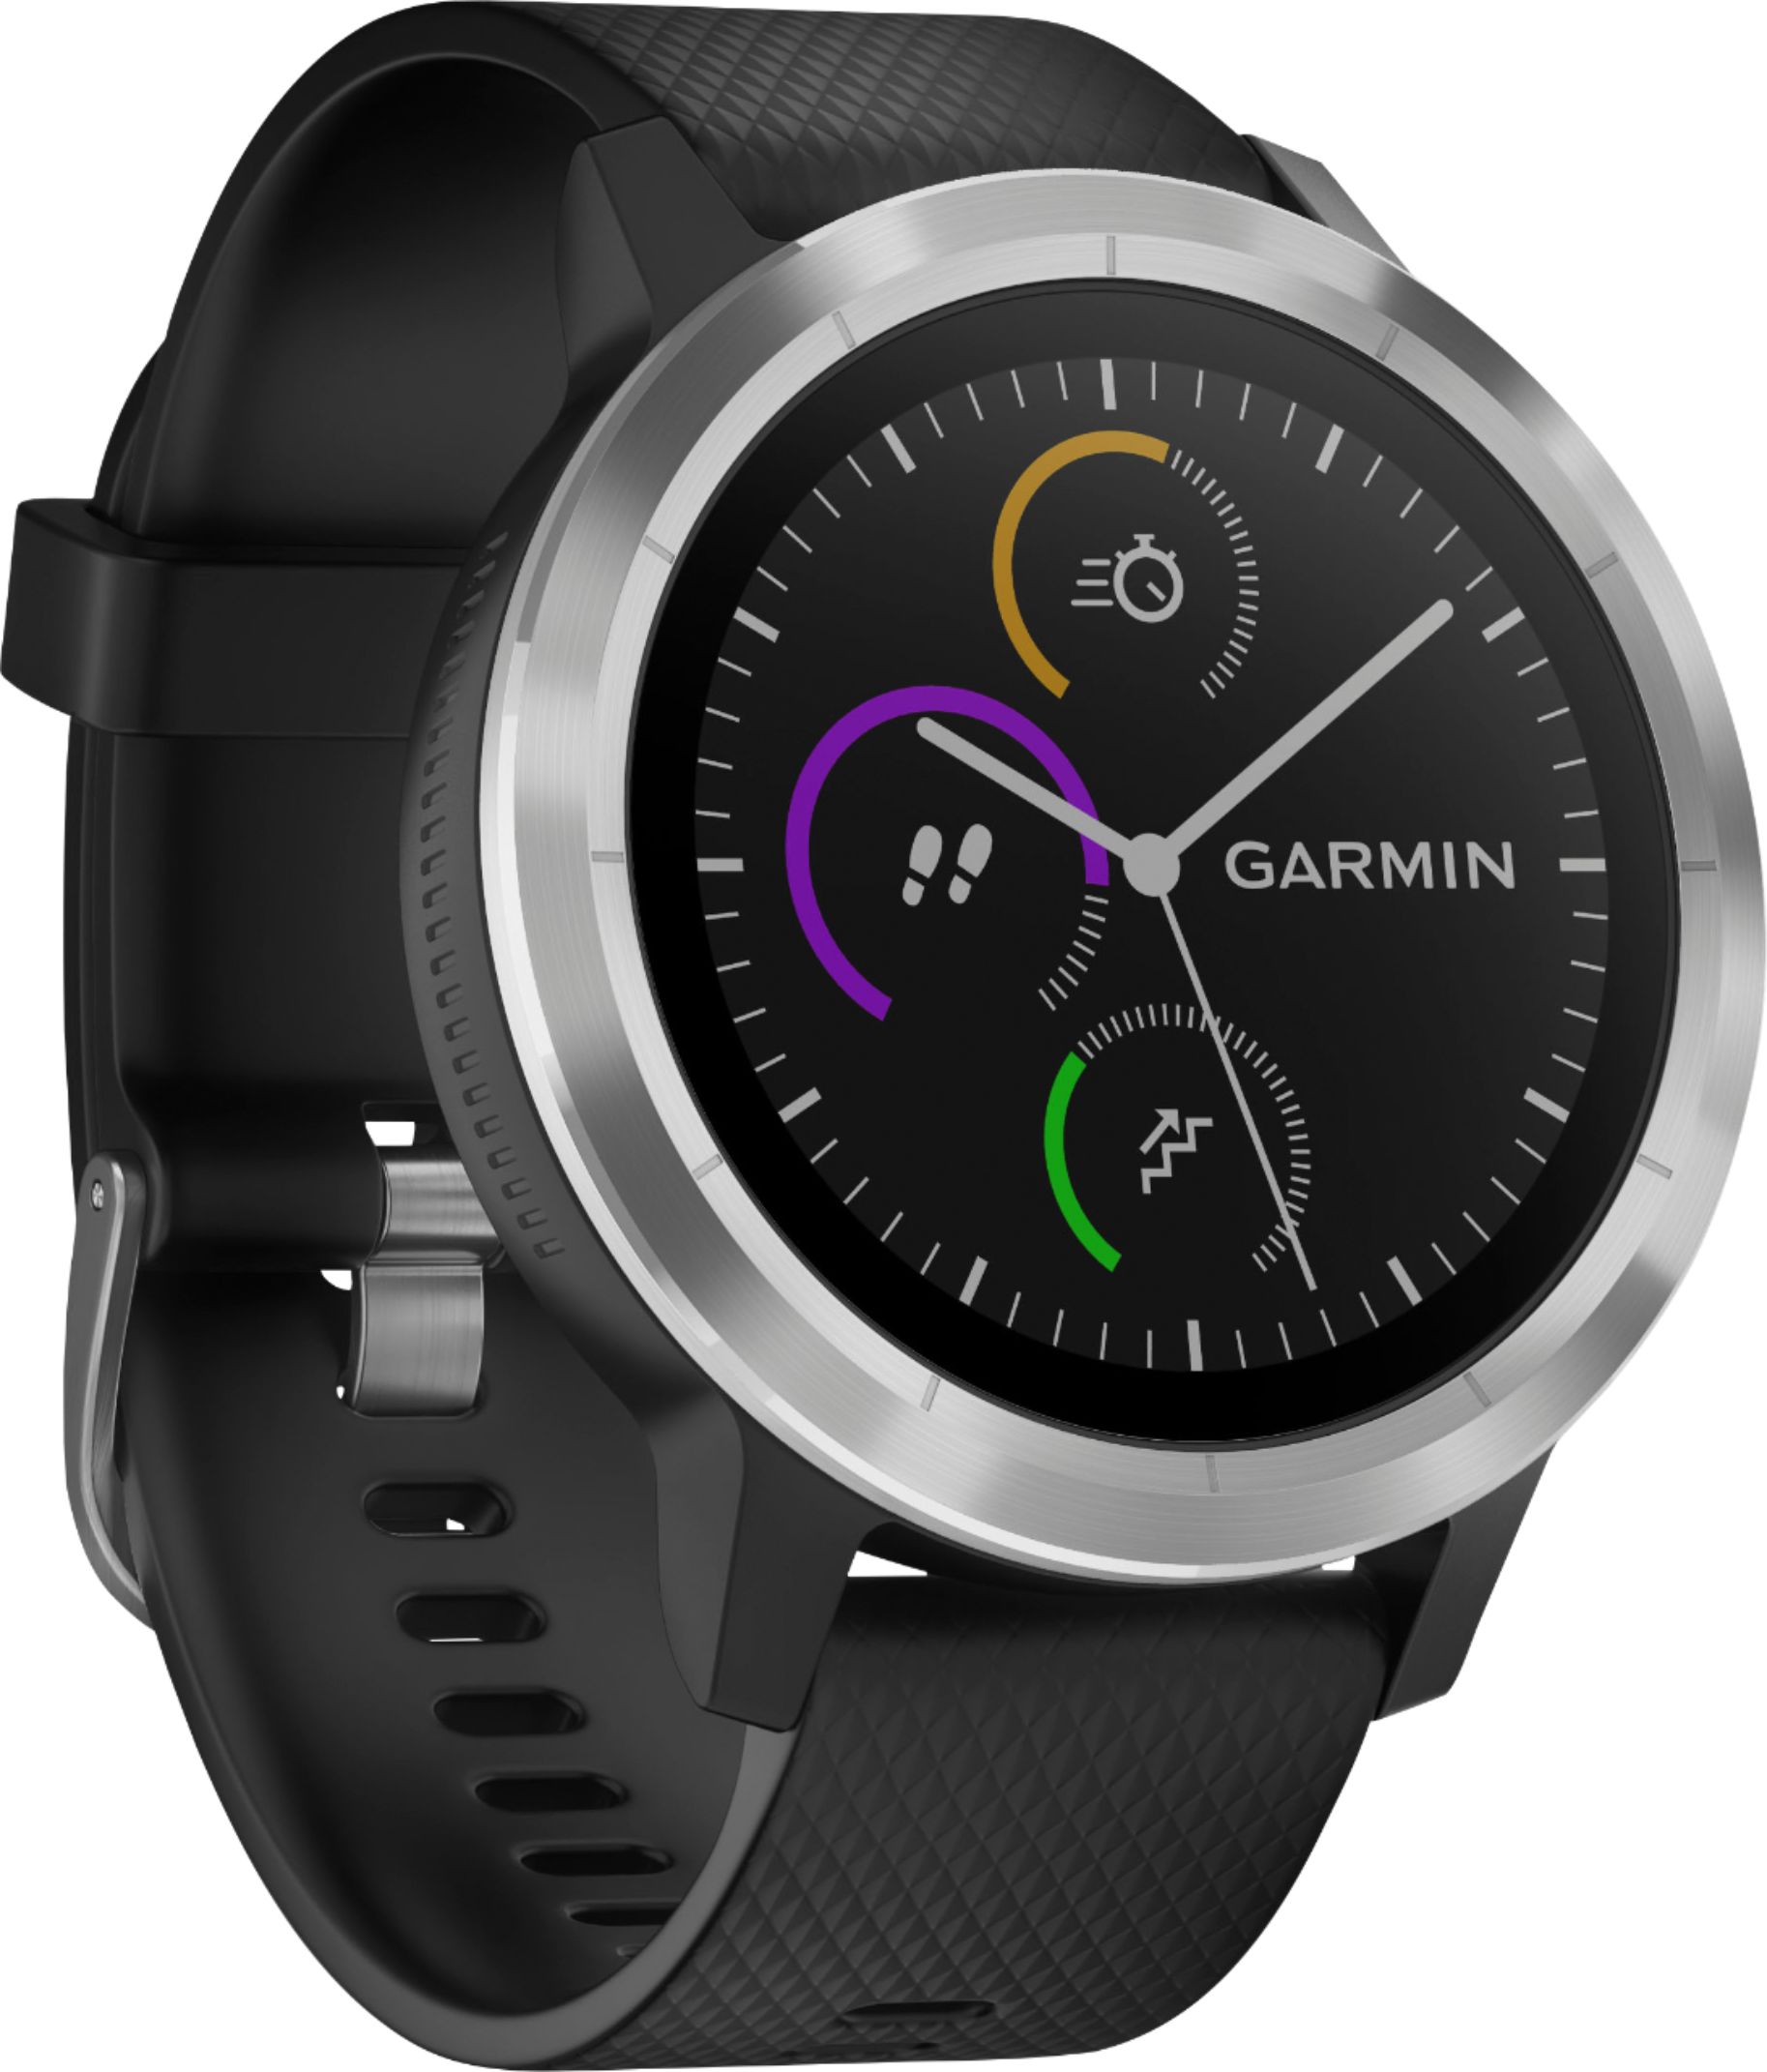 Angle View: Garmin - vívoactive 3 Smartwatch - Stainless steel